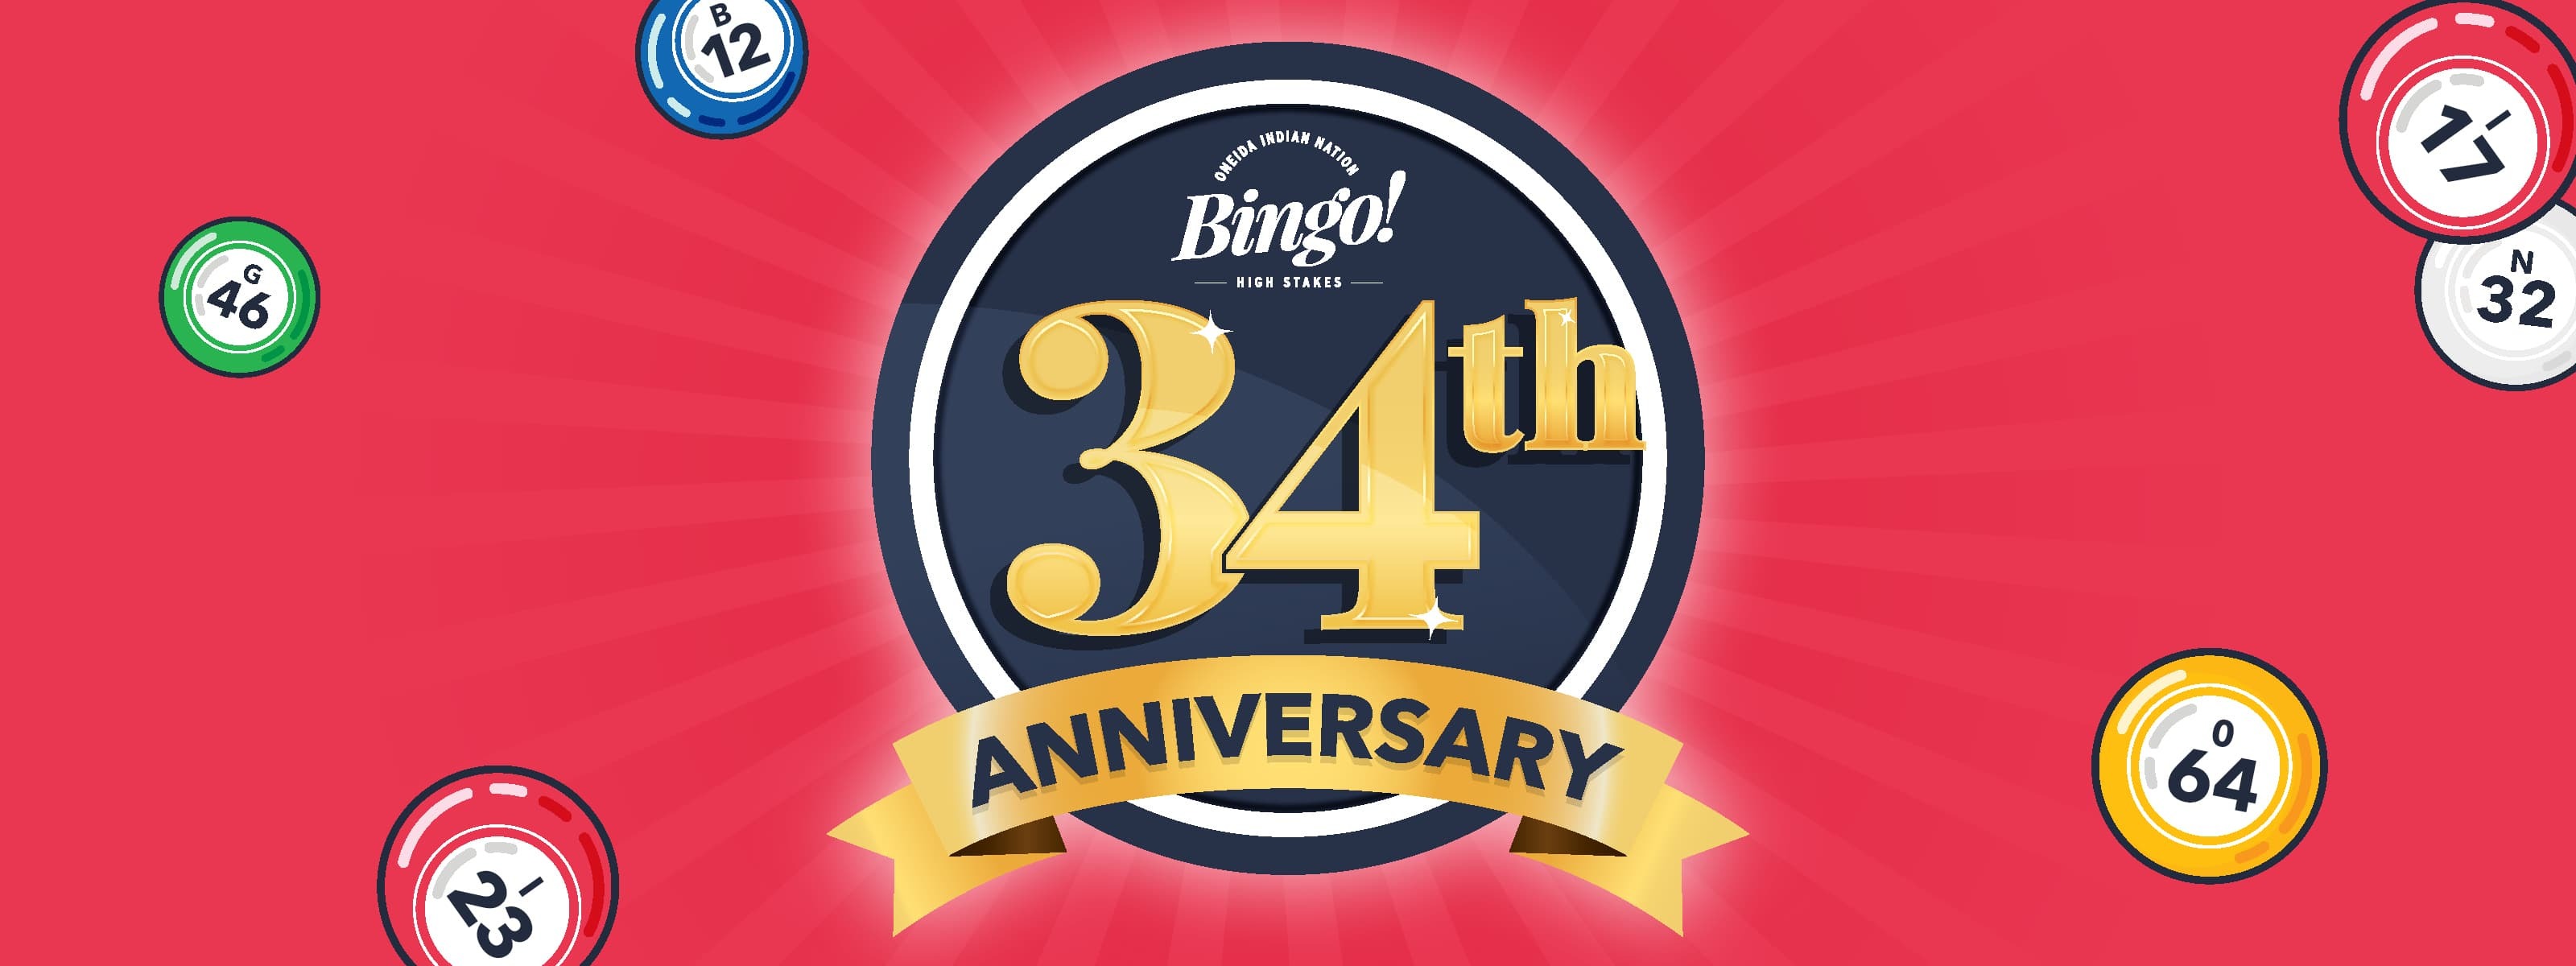 bingo 34th anniversary